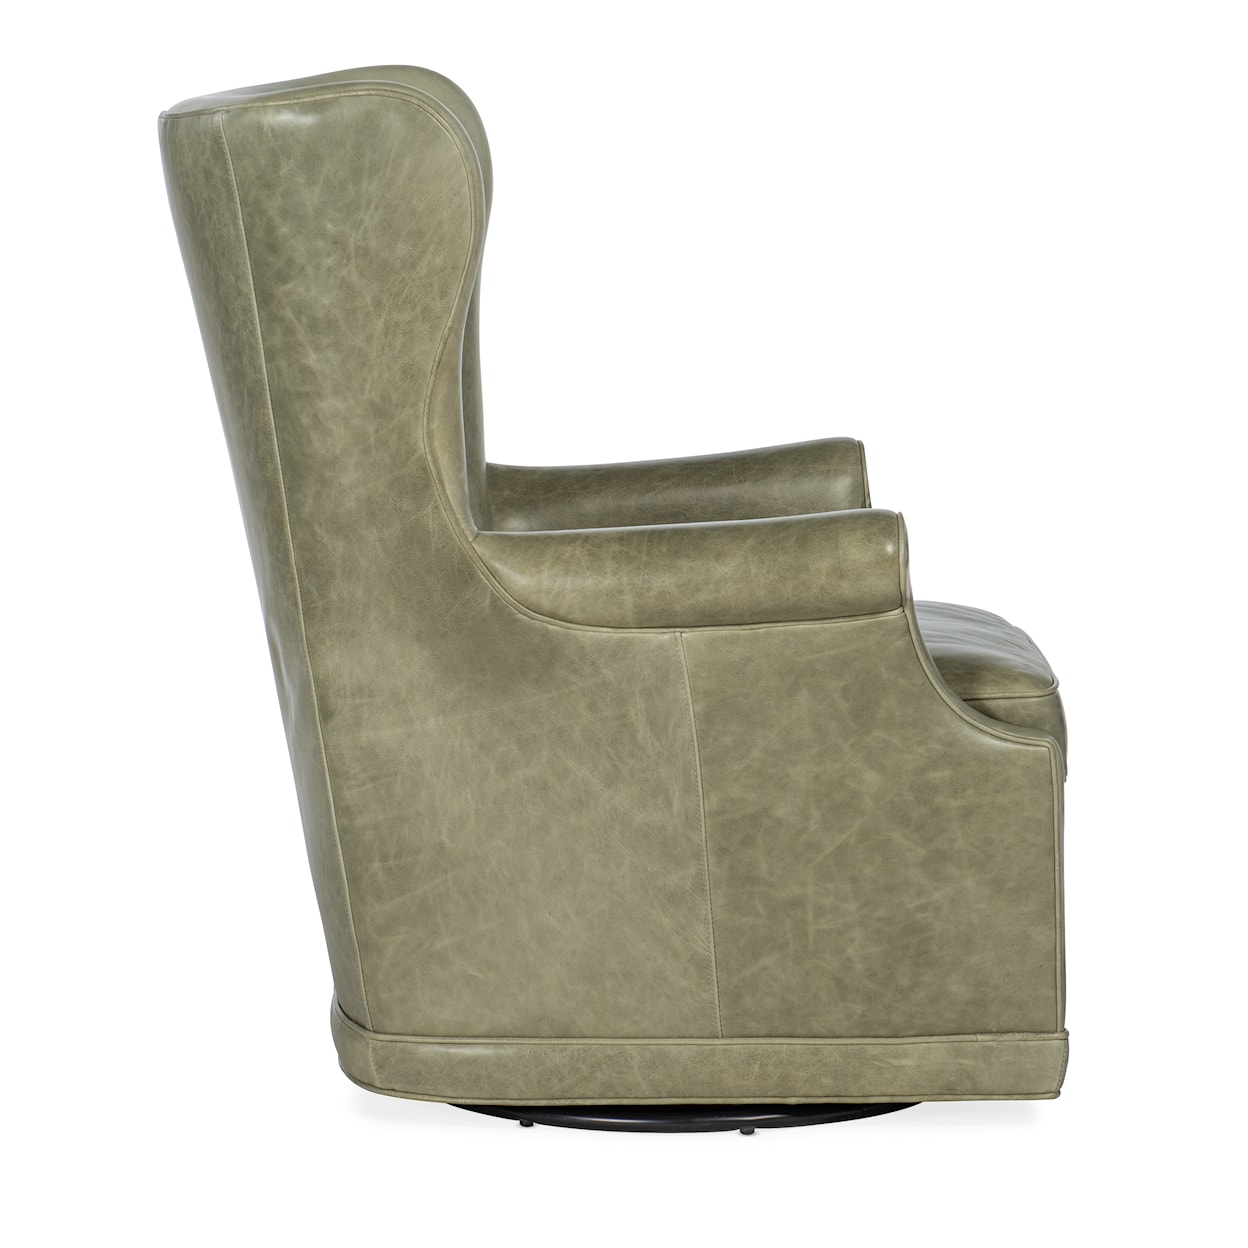 Hooker Furniture Club Chairs Mai Wing Swivel Club Chair